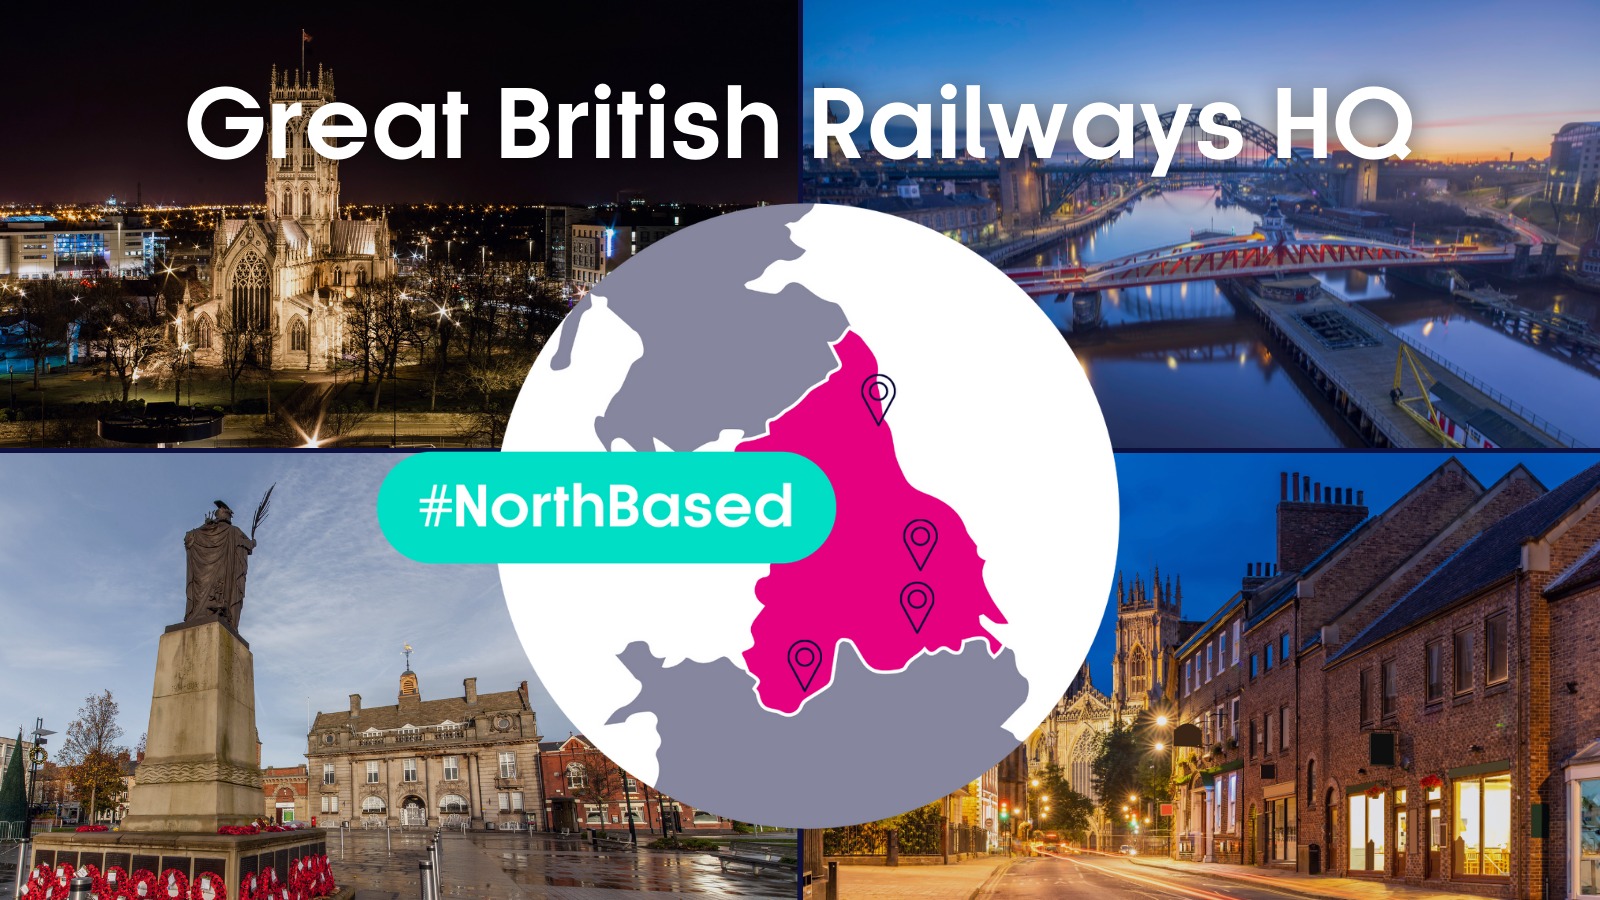 Great British Railways HQ should be North Based